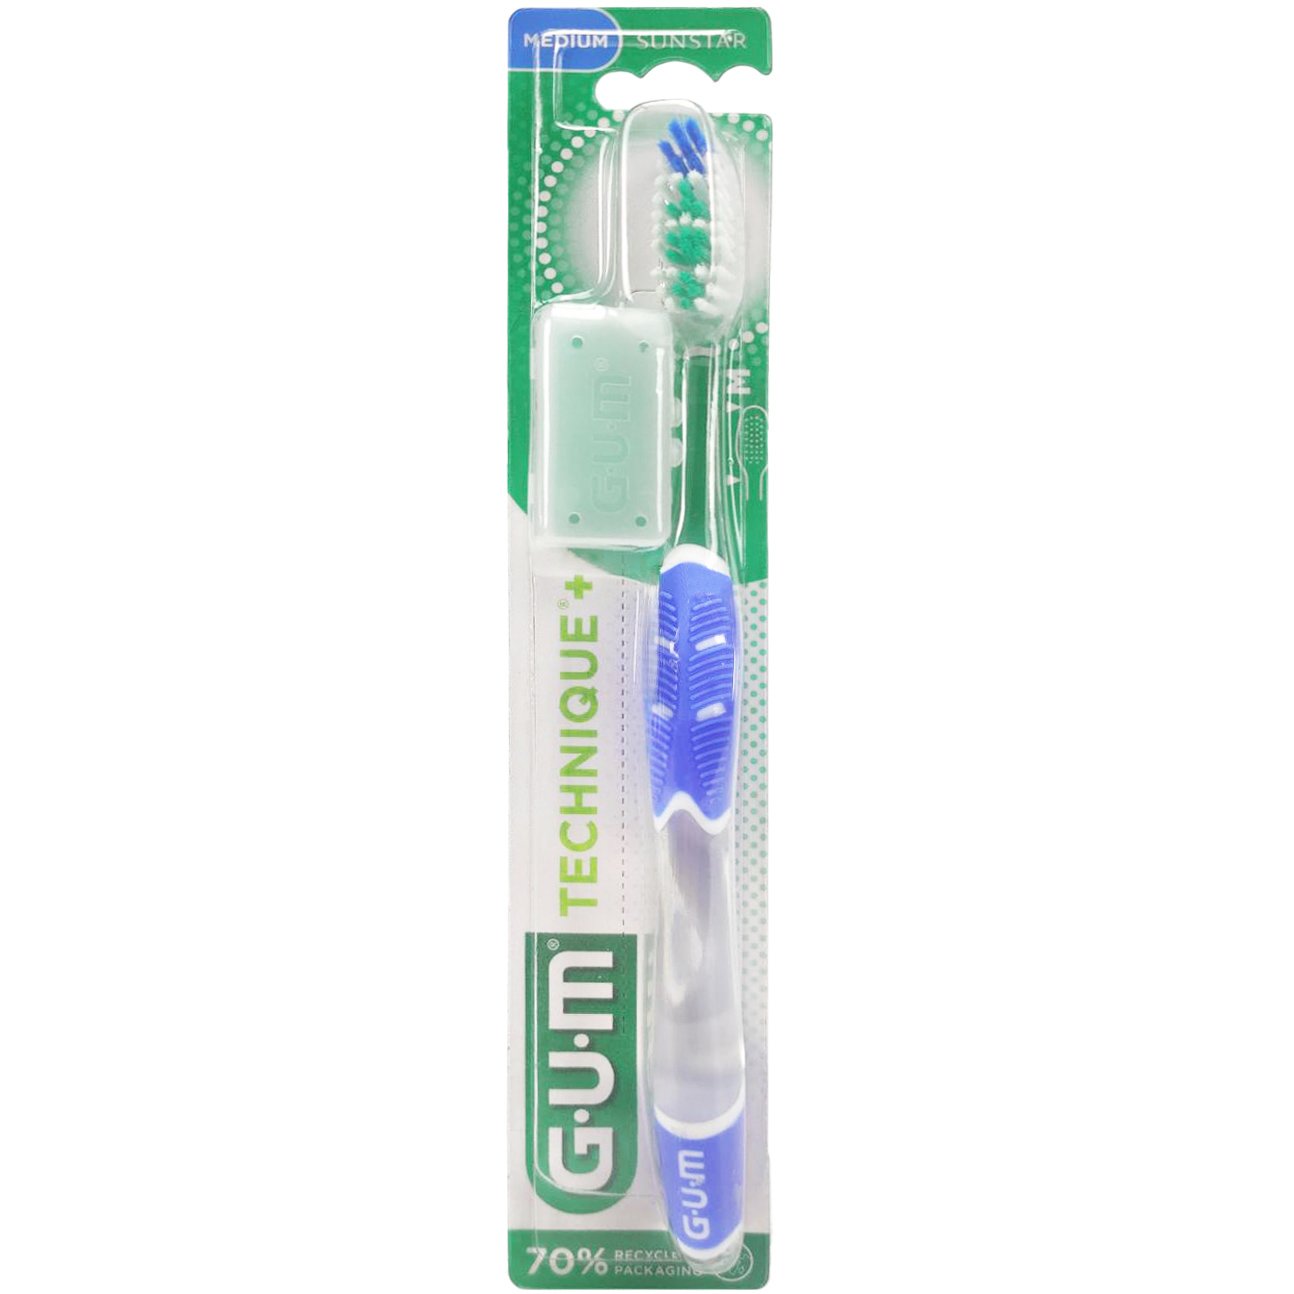 Gum Technique+ Medium Toothbrush Χειροκίνητη Οδοντόβουρτσα με Μέτριες Ίνες 1 Τεμάχιο, Κωδ 492 – Μπλε